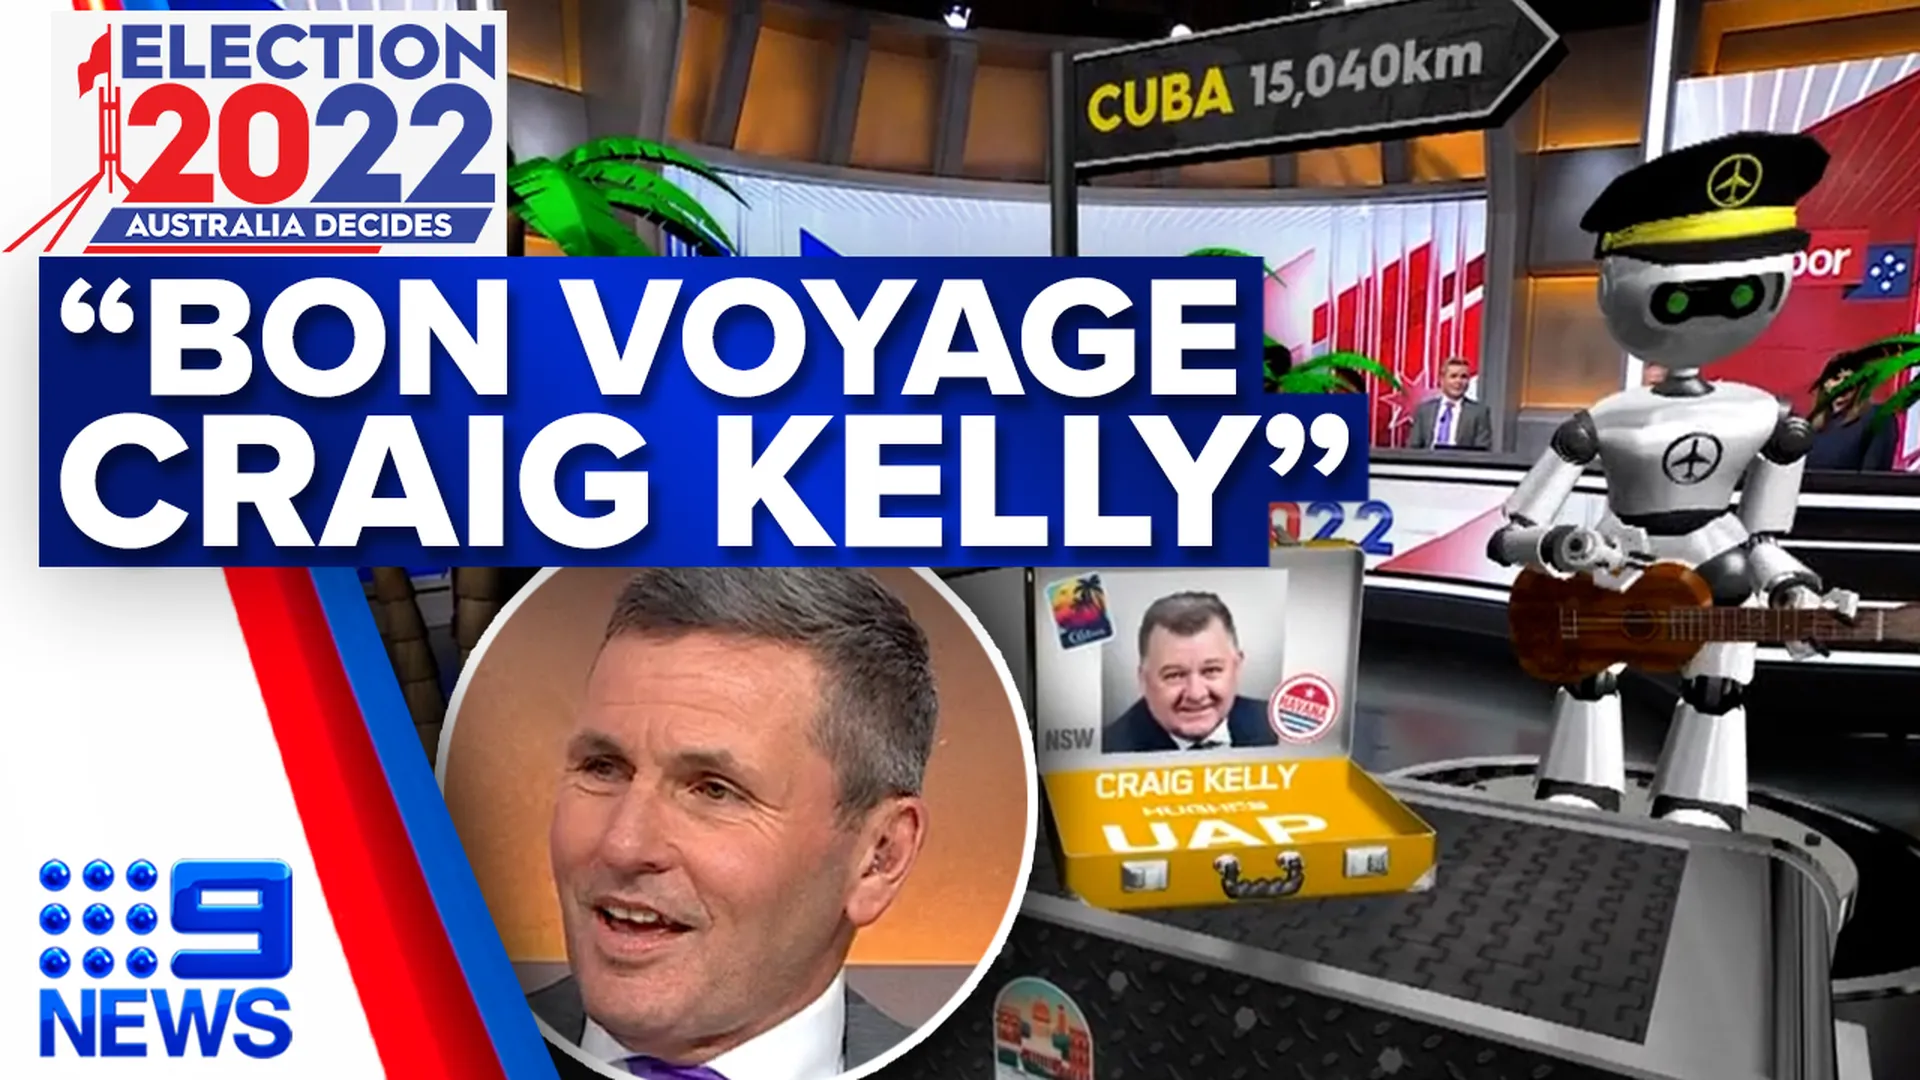 Craig Kelly seat